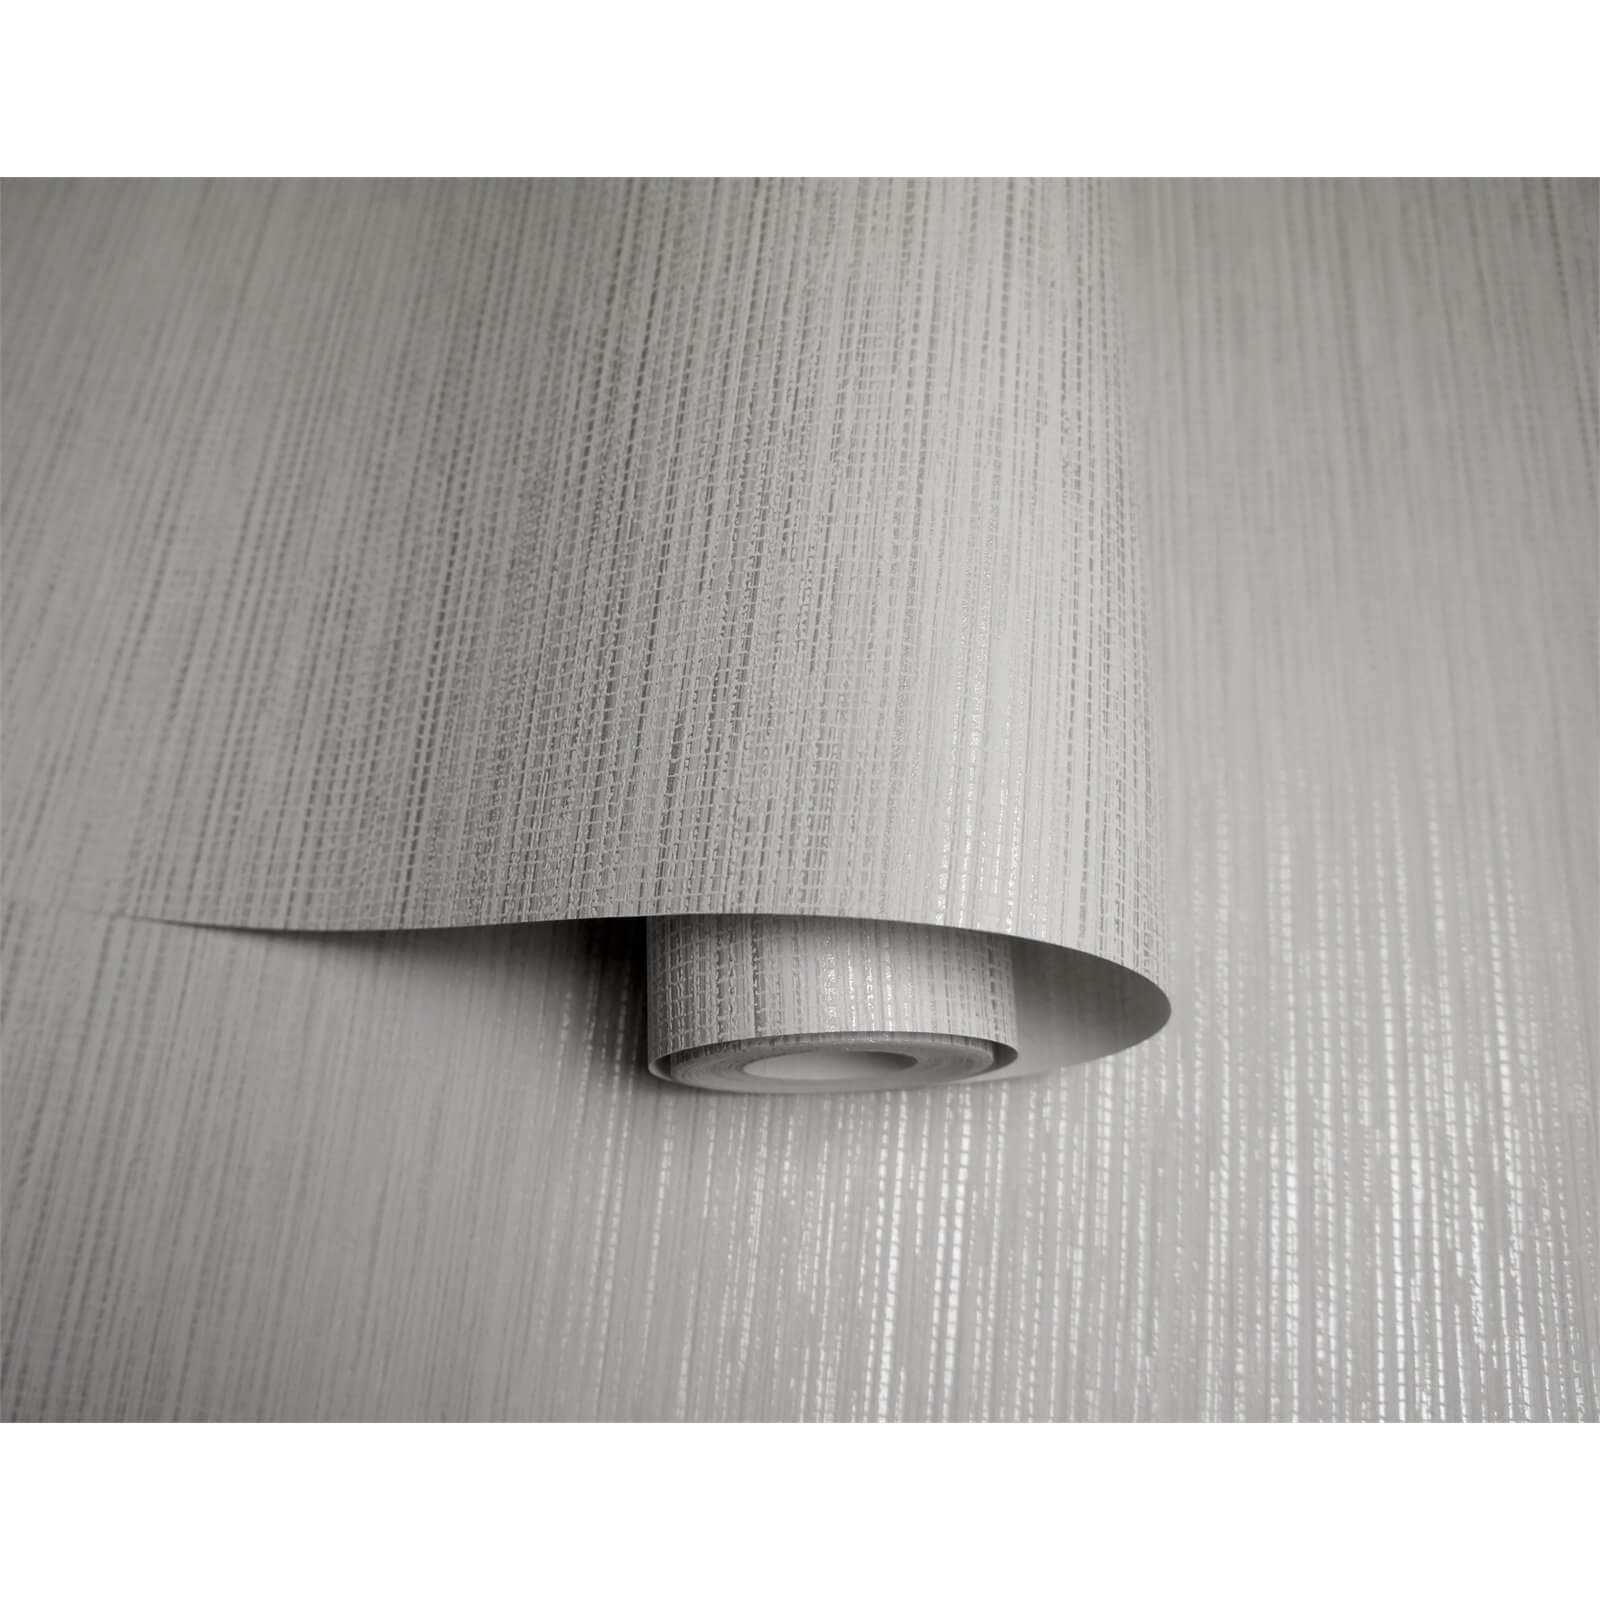 Holden Decor Bambara Plain Textured Metallic Grey Wallpaper